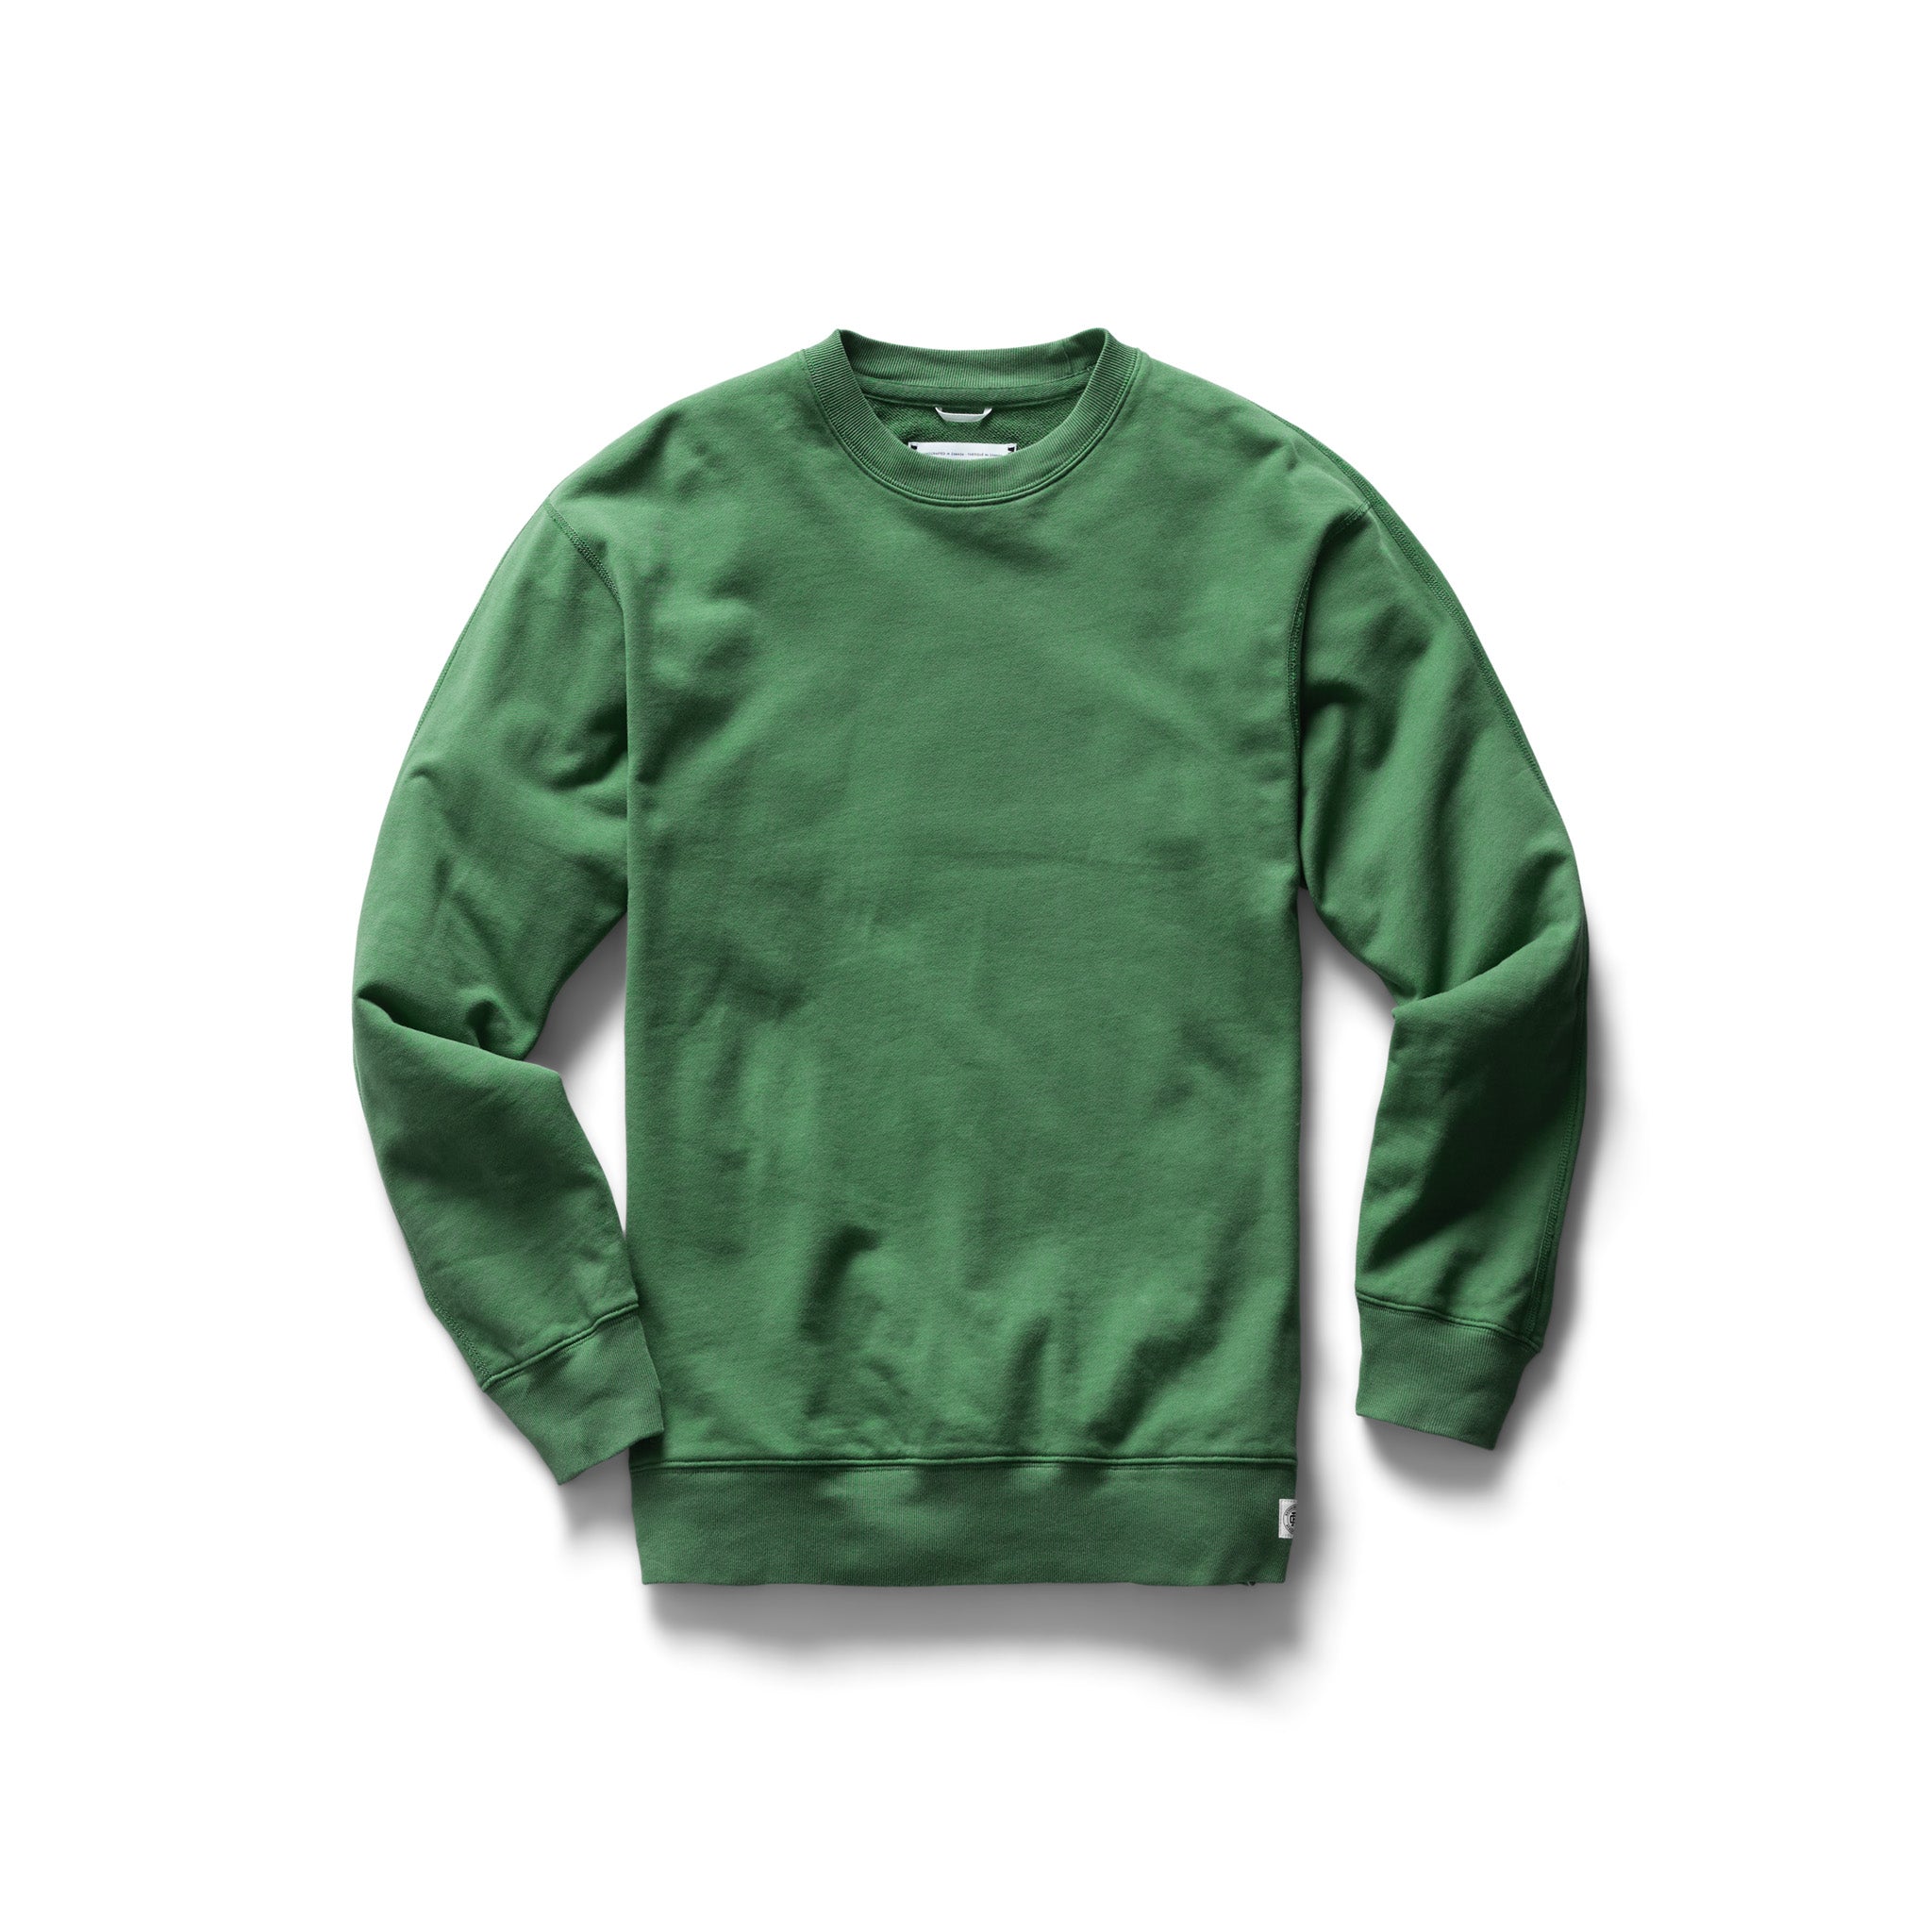 J Crew Men's French Terry Crewneck Sweatshirt Garment Dyed Cypress Green L  - NWT